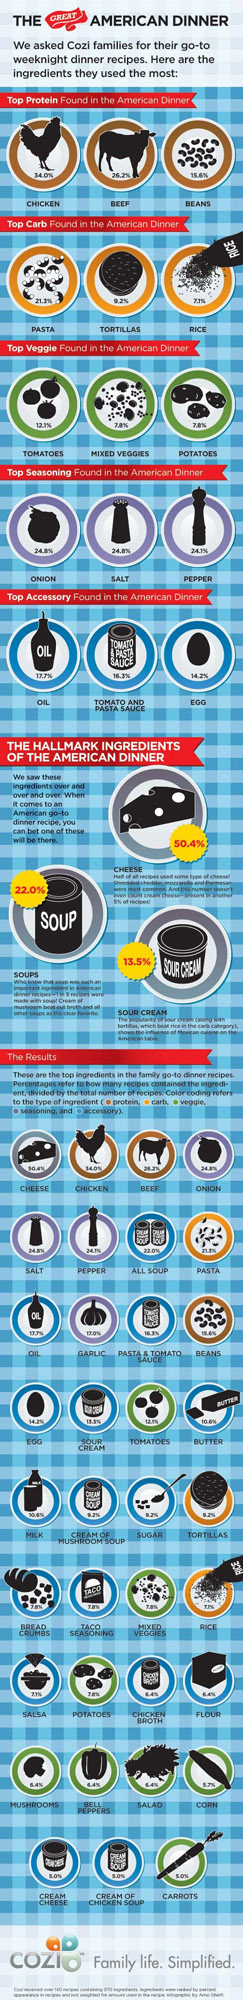 Top dinner ingredients infographic